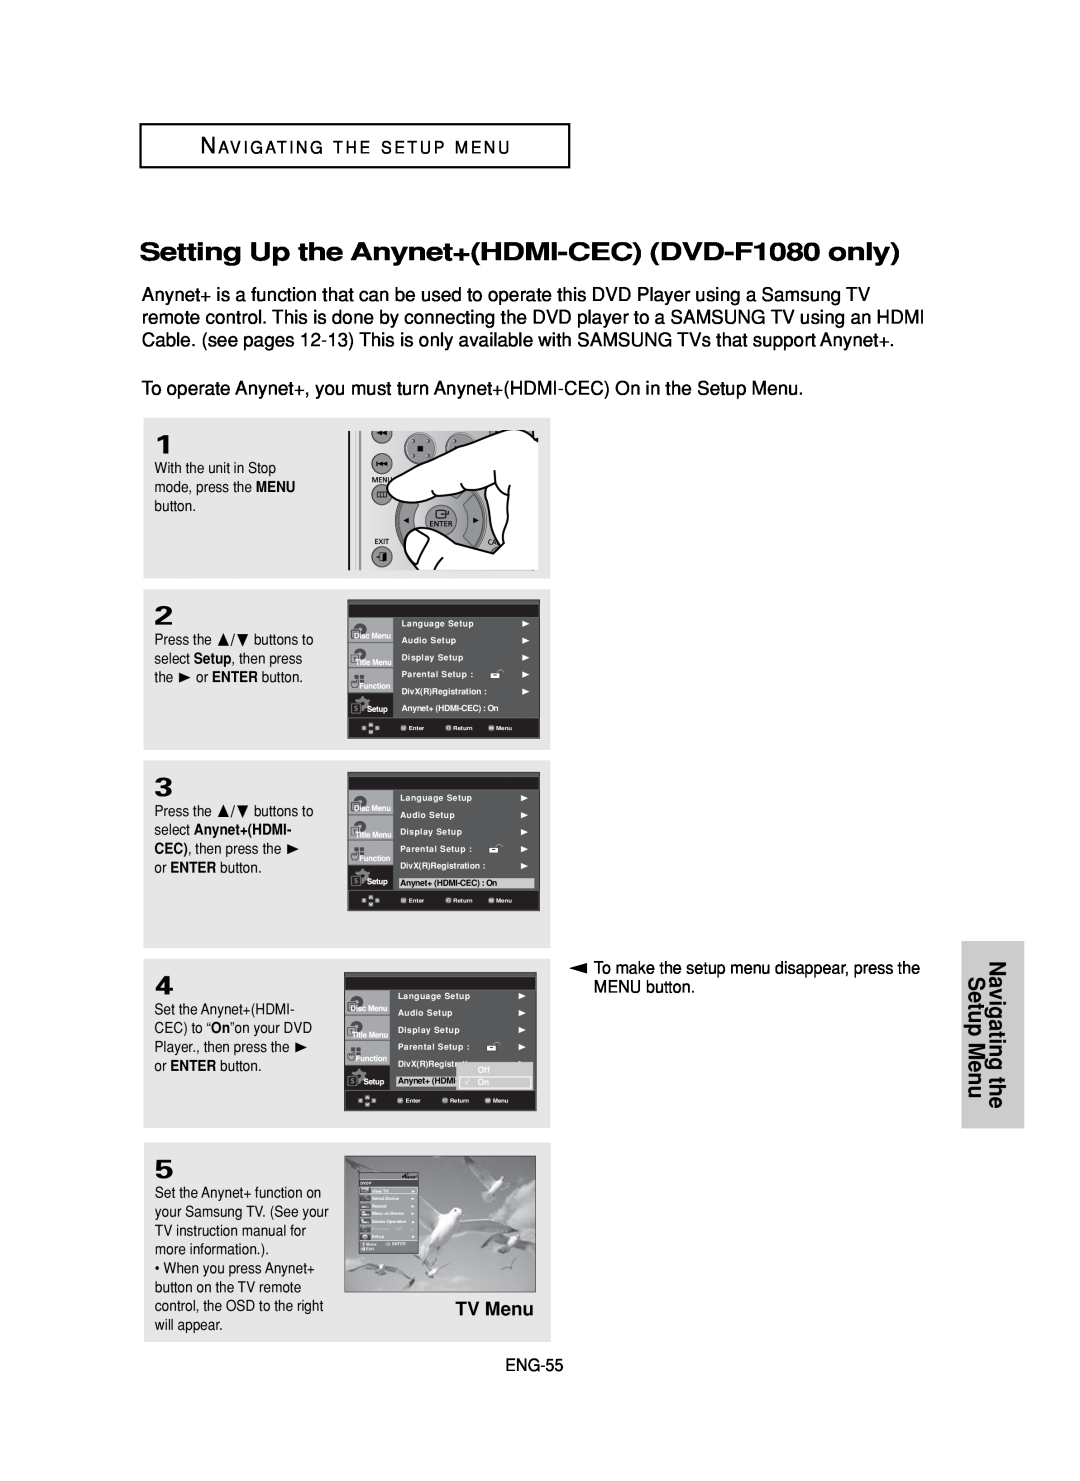 Samsung DVD-FP580 Setting Up the Anynet+HDMI-CEC DVD-F1080 only, N Av I G At I N G T H E S E T U P M E N U, ENG-55 